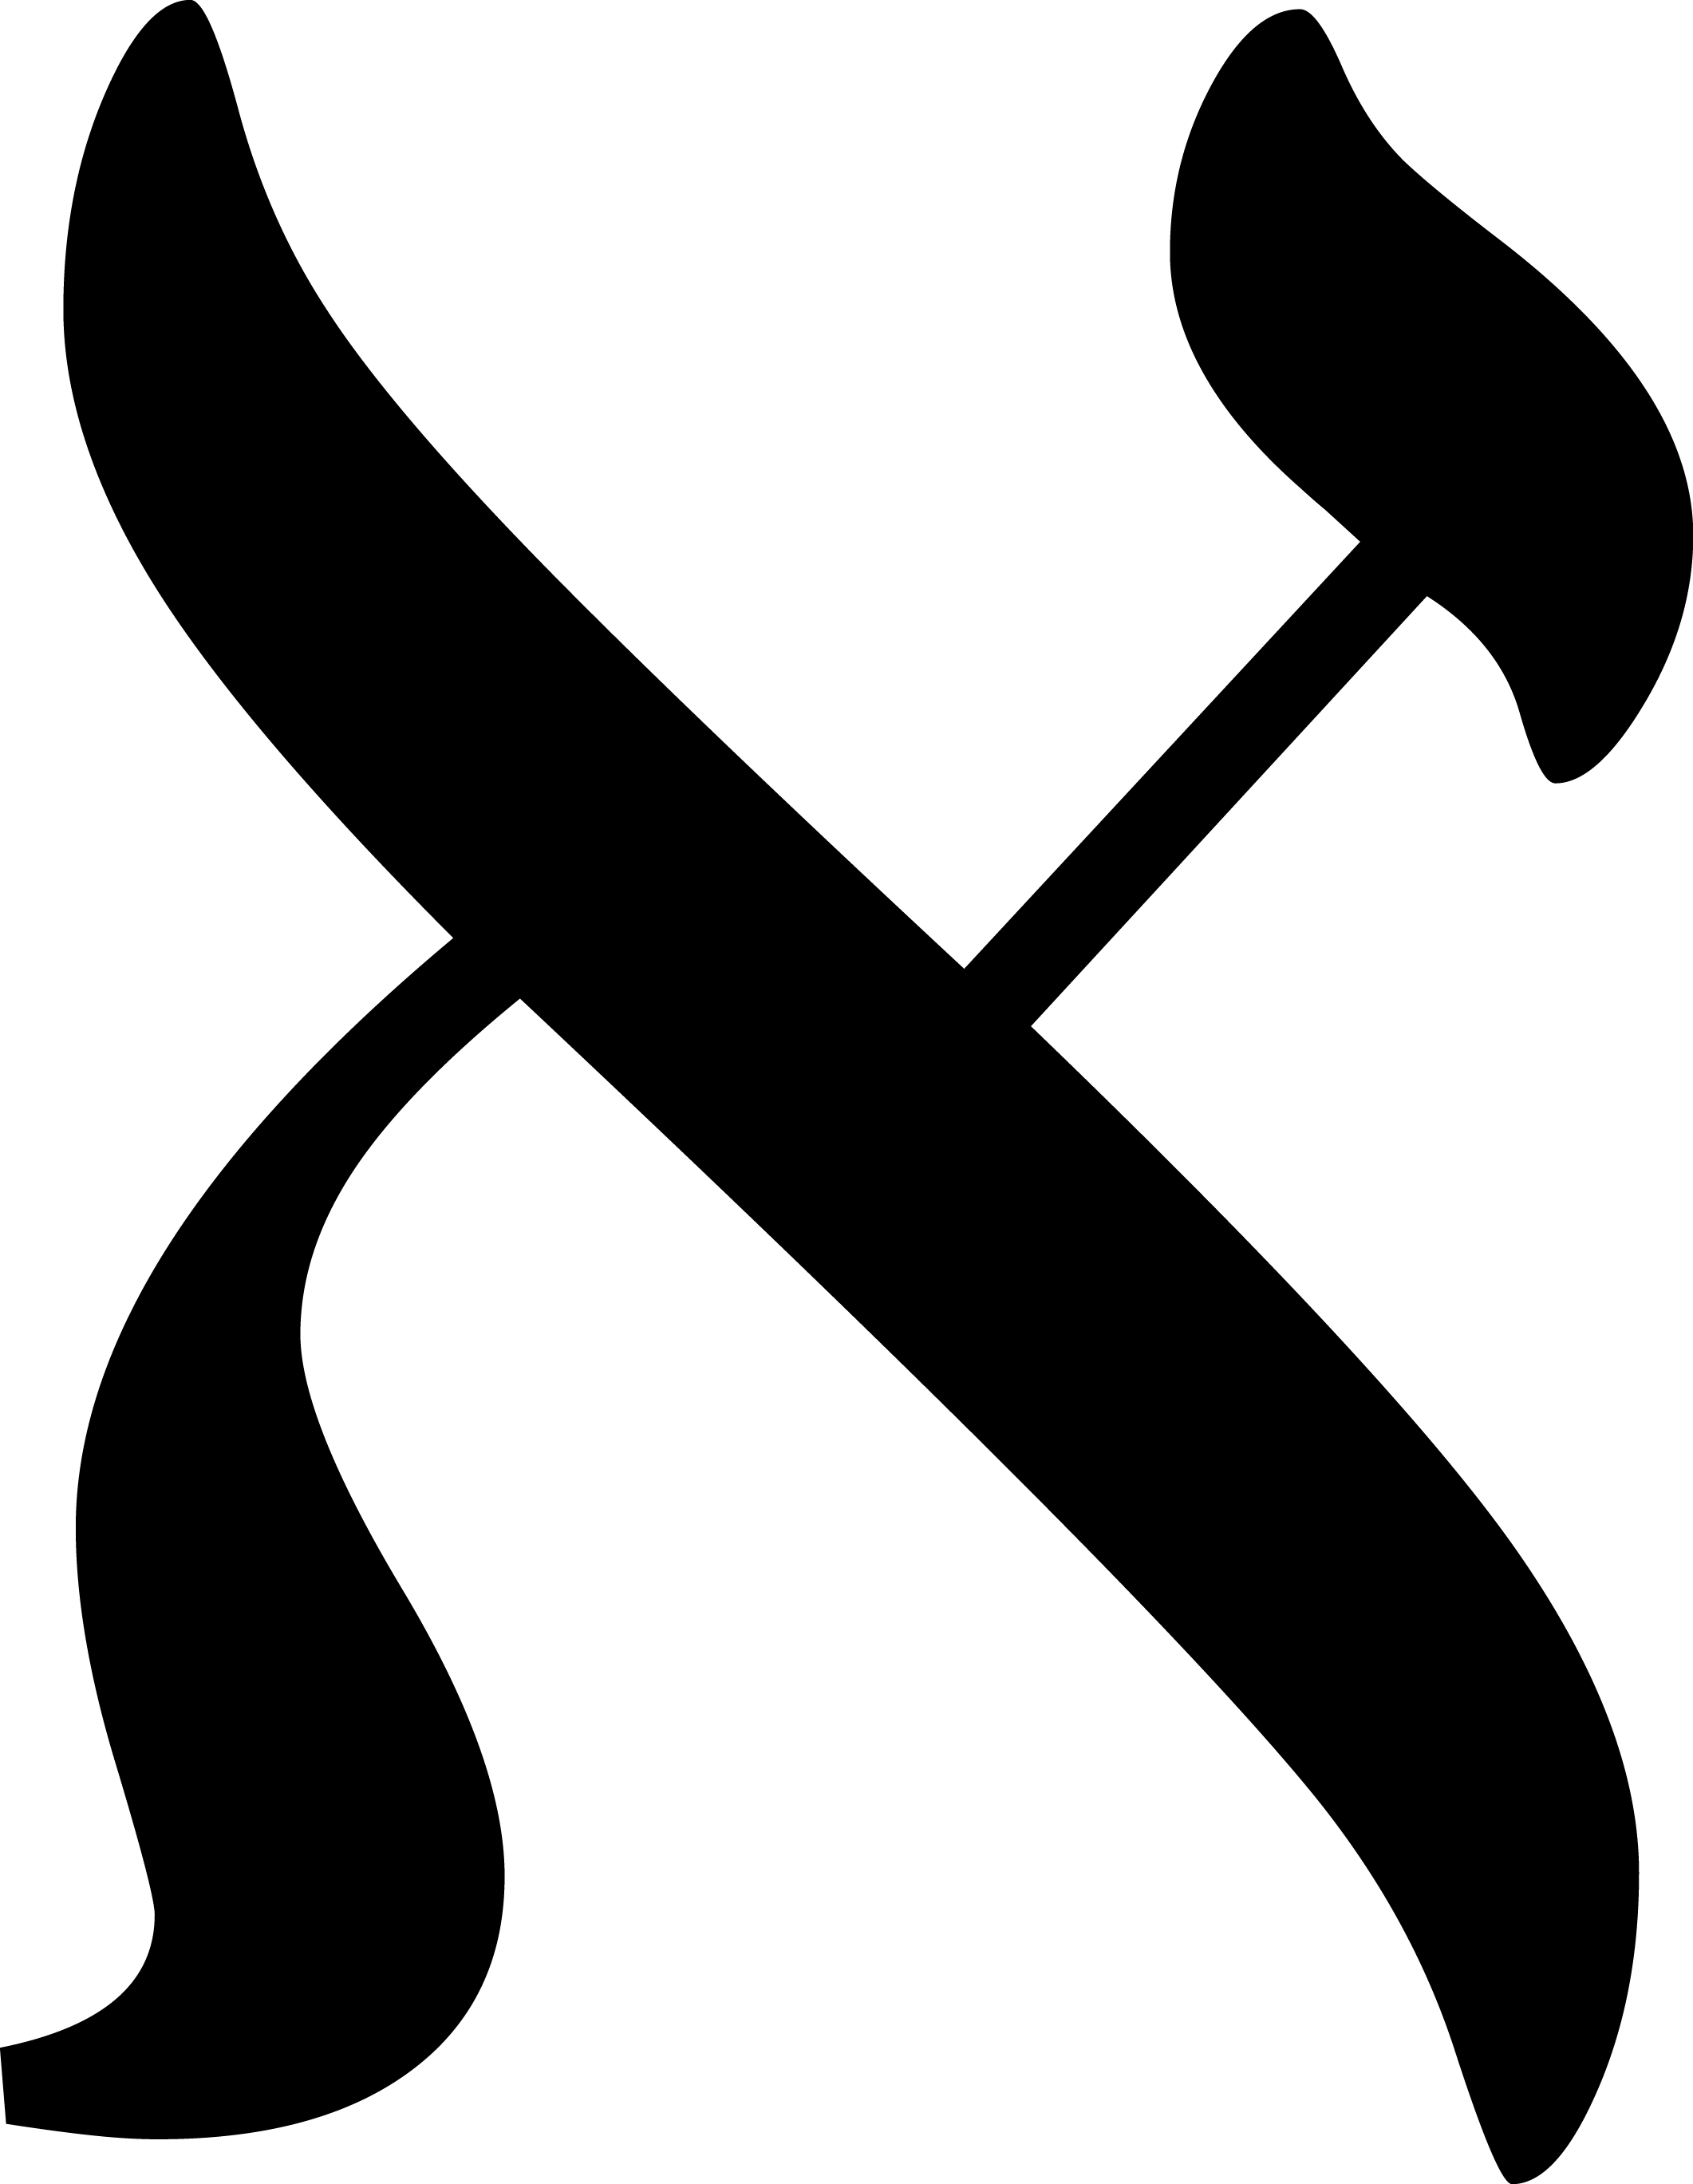 Aleph symbol